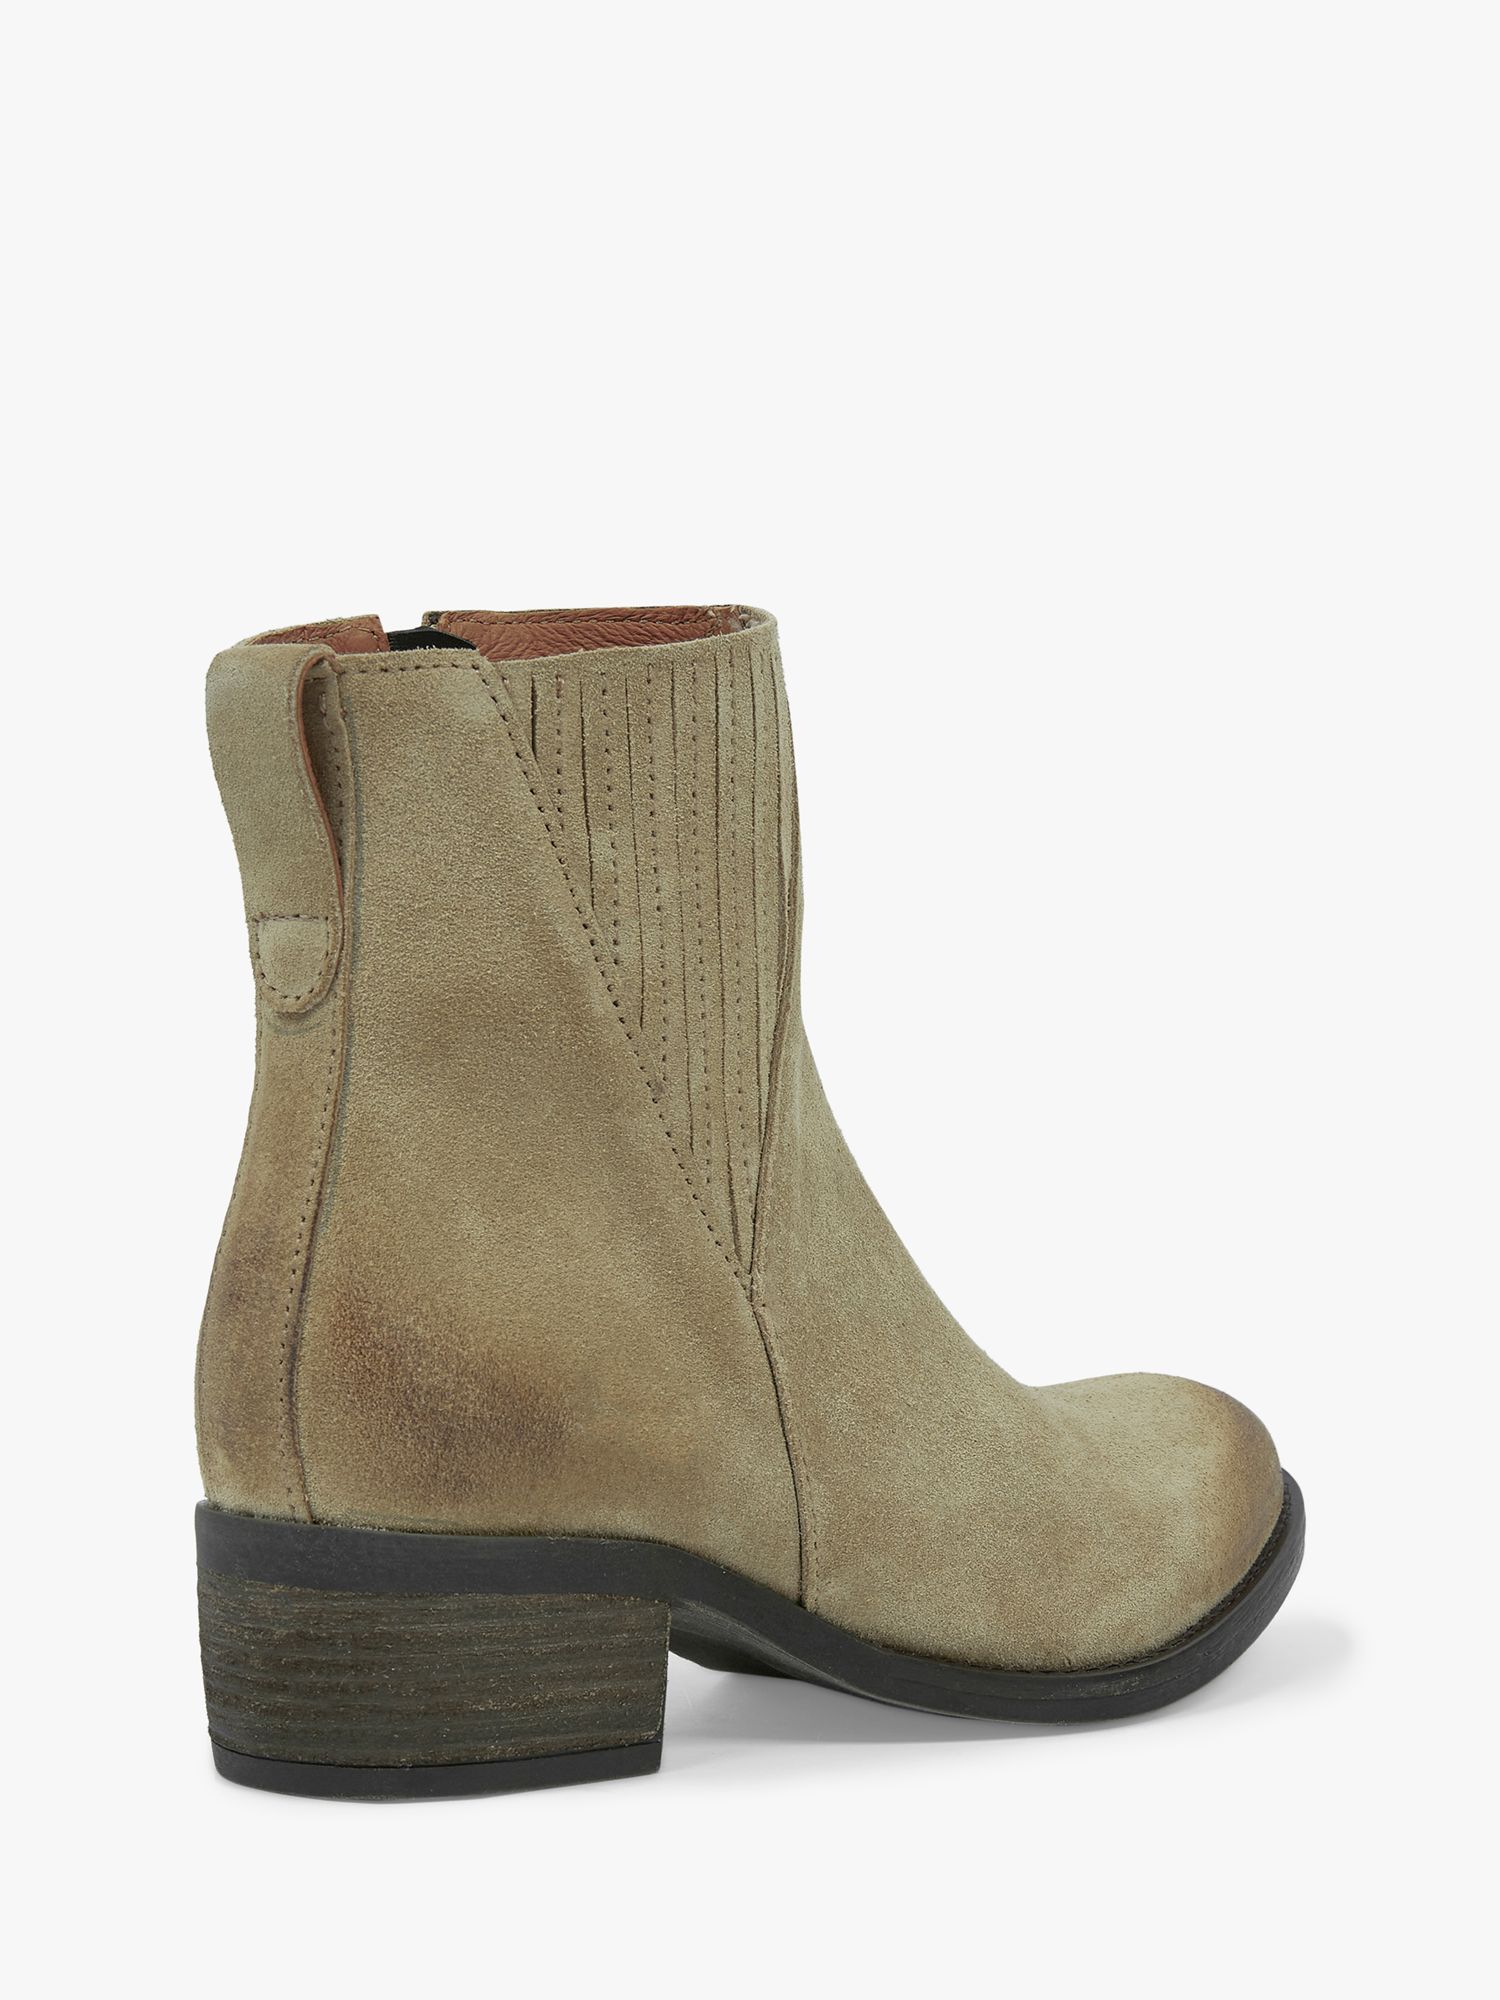 Celtic & Co. Western Suede Ankle Boots, Camel, EU39